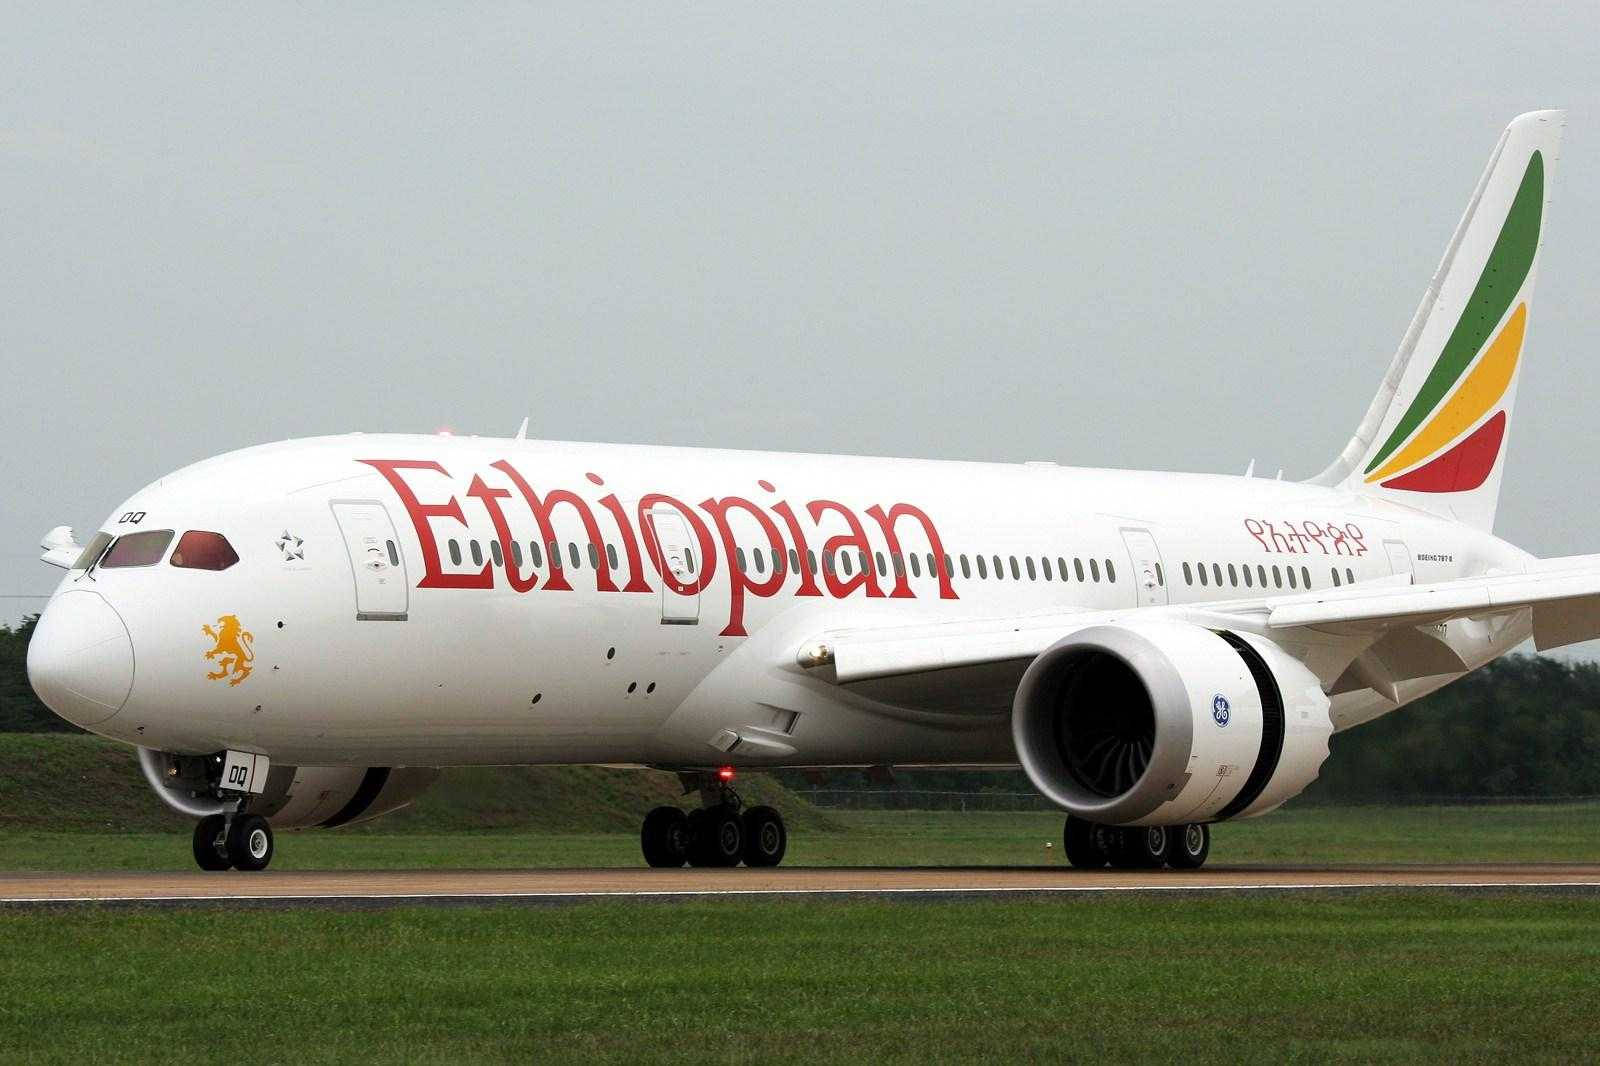 Ethiopian Airlines Plane On Grassy Runway Wallpaper